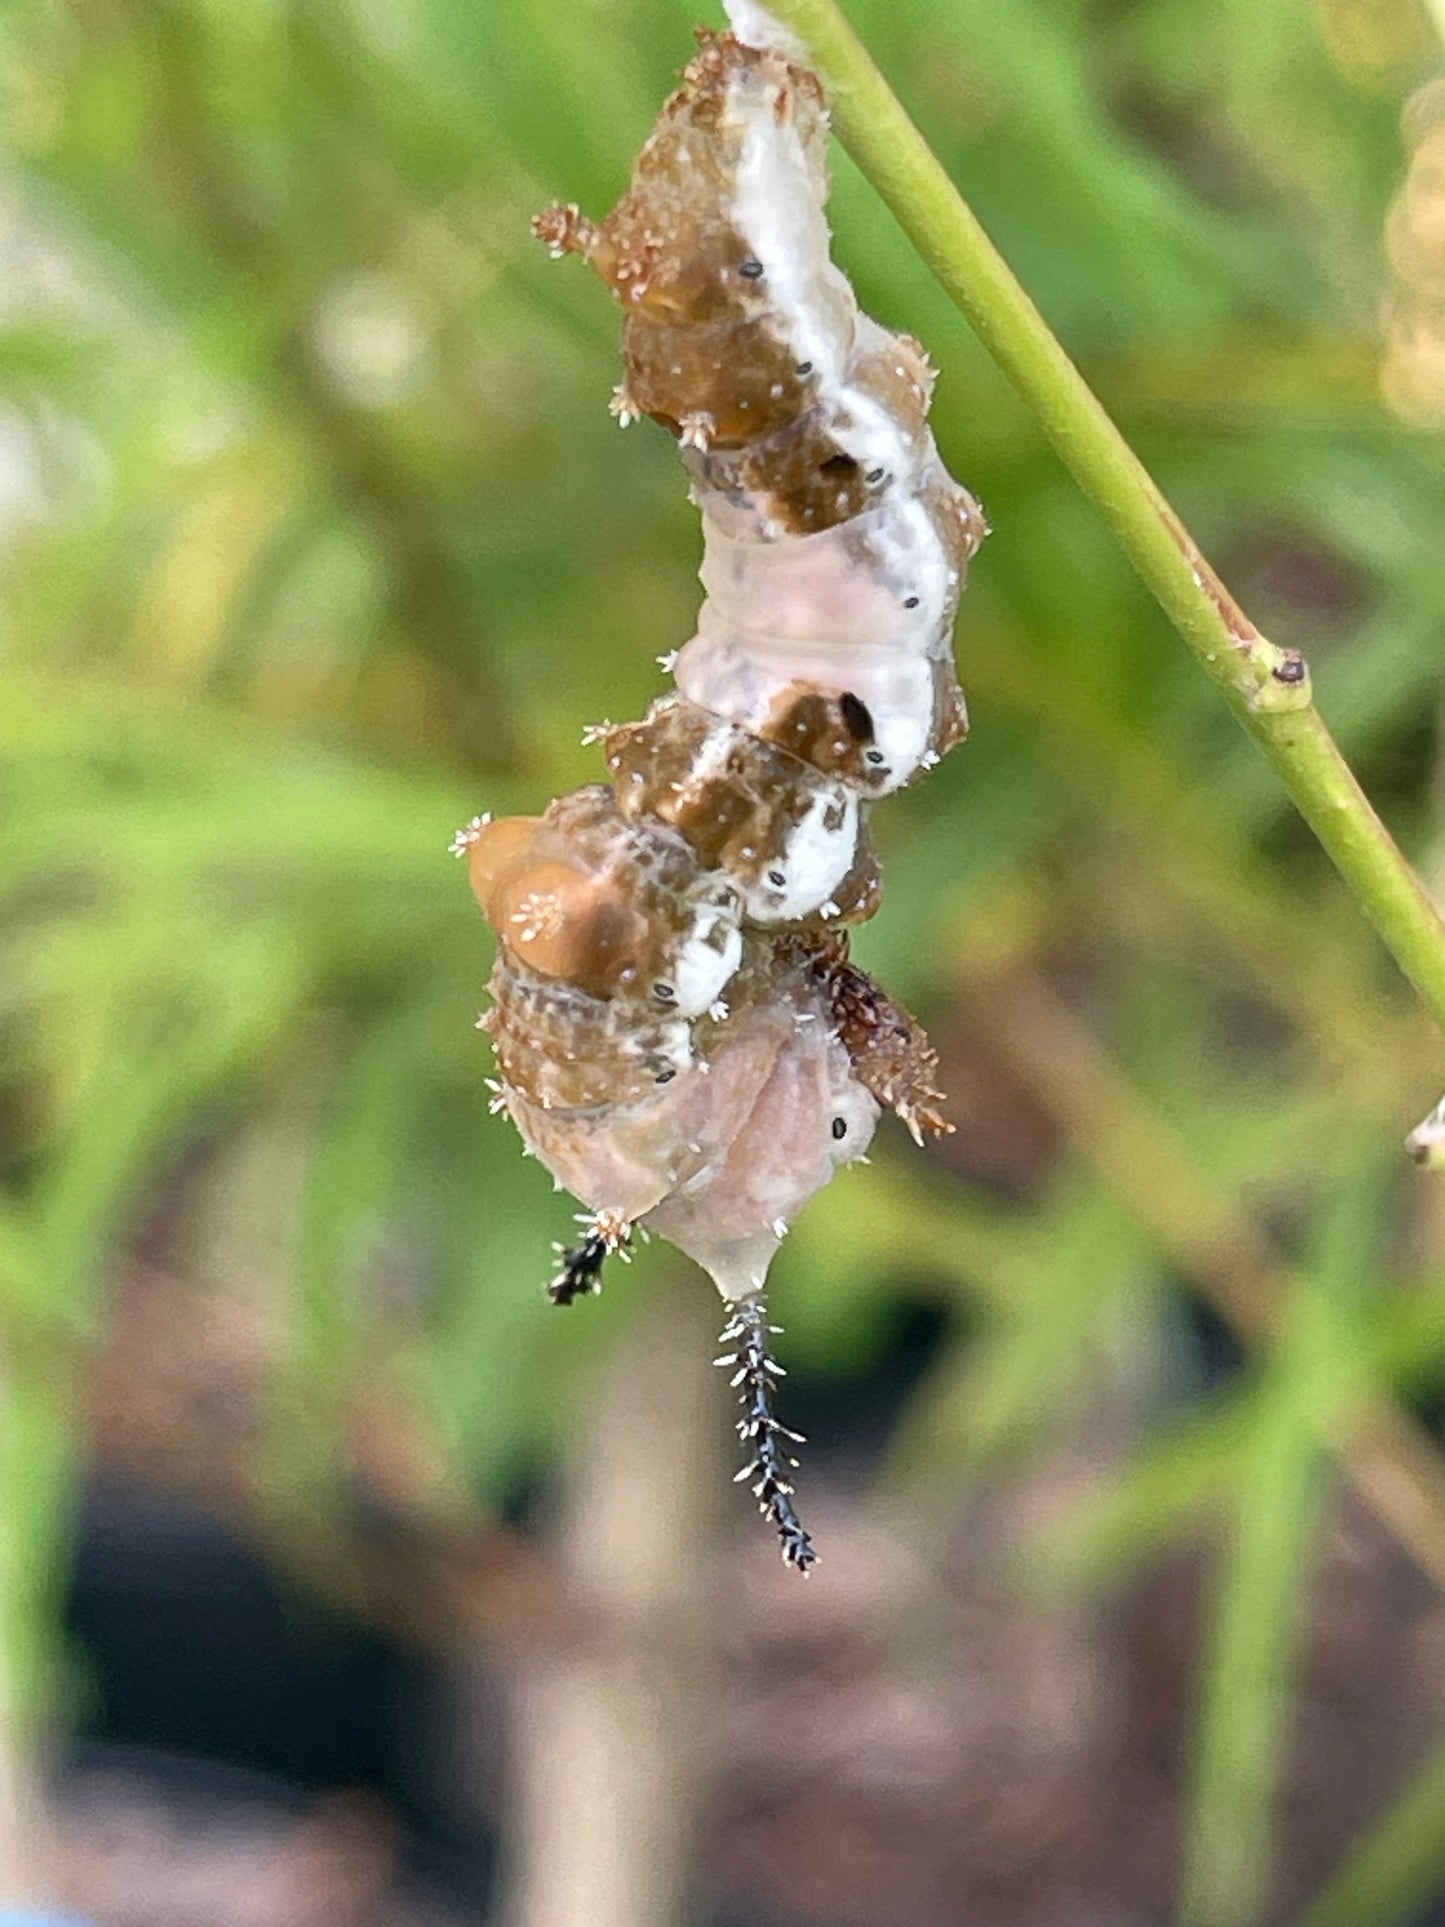 viceroy chrysalis on host tree white ash 